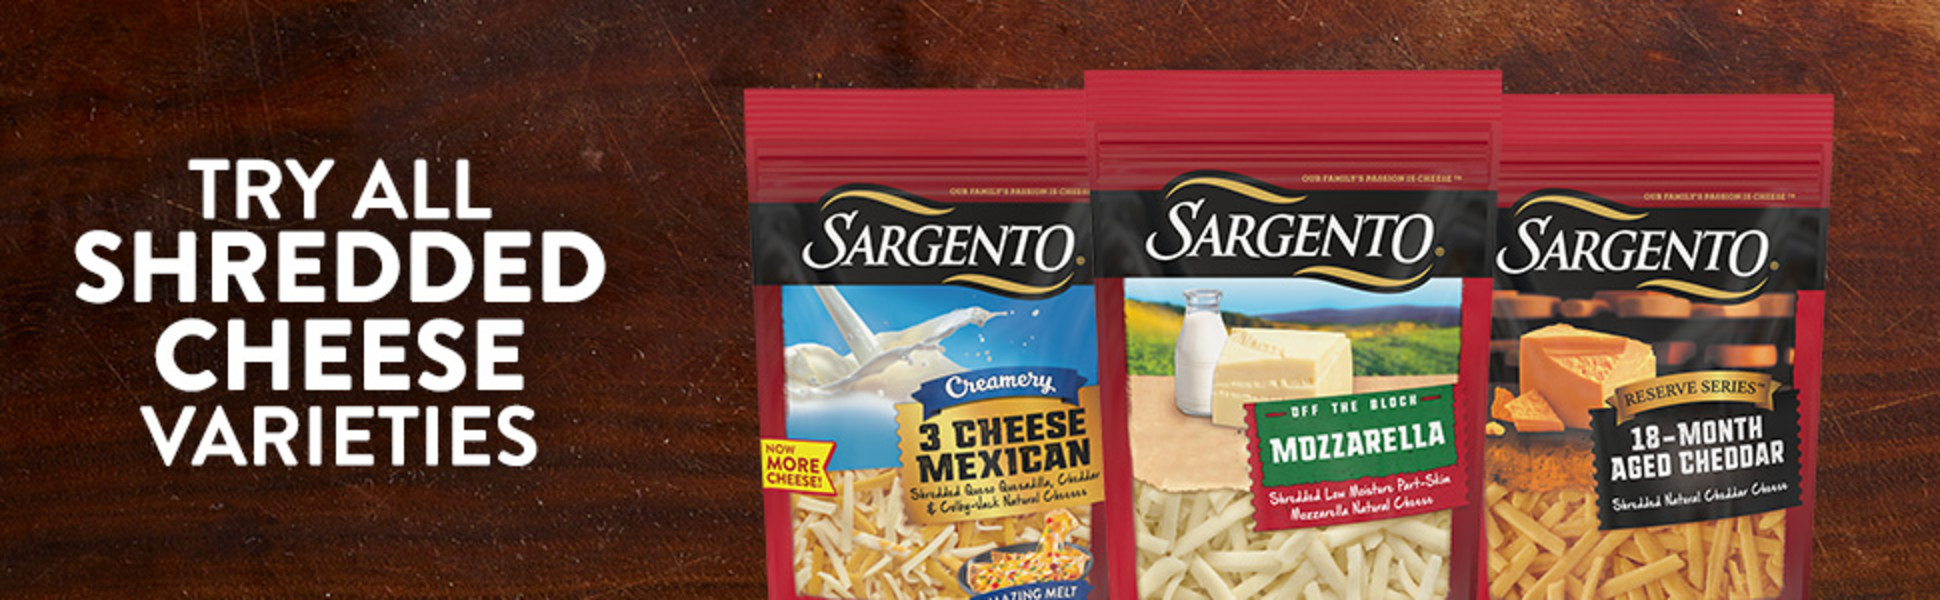 Sargento® Off the Block Shredded Cheddar Jack Cheese, 16 oz - Jay